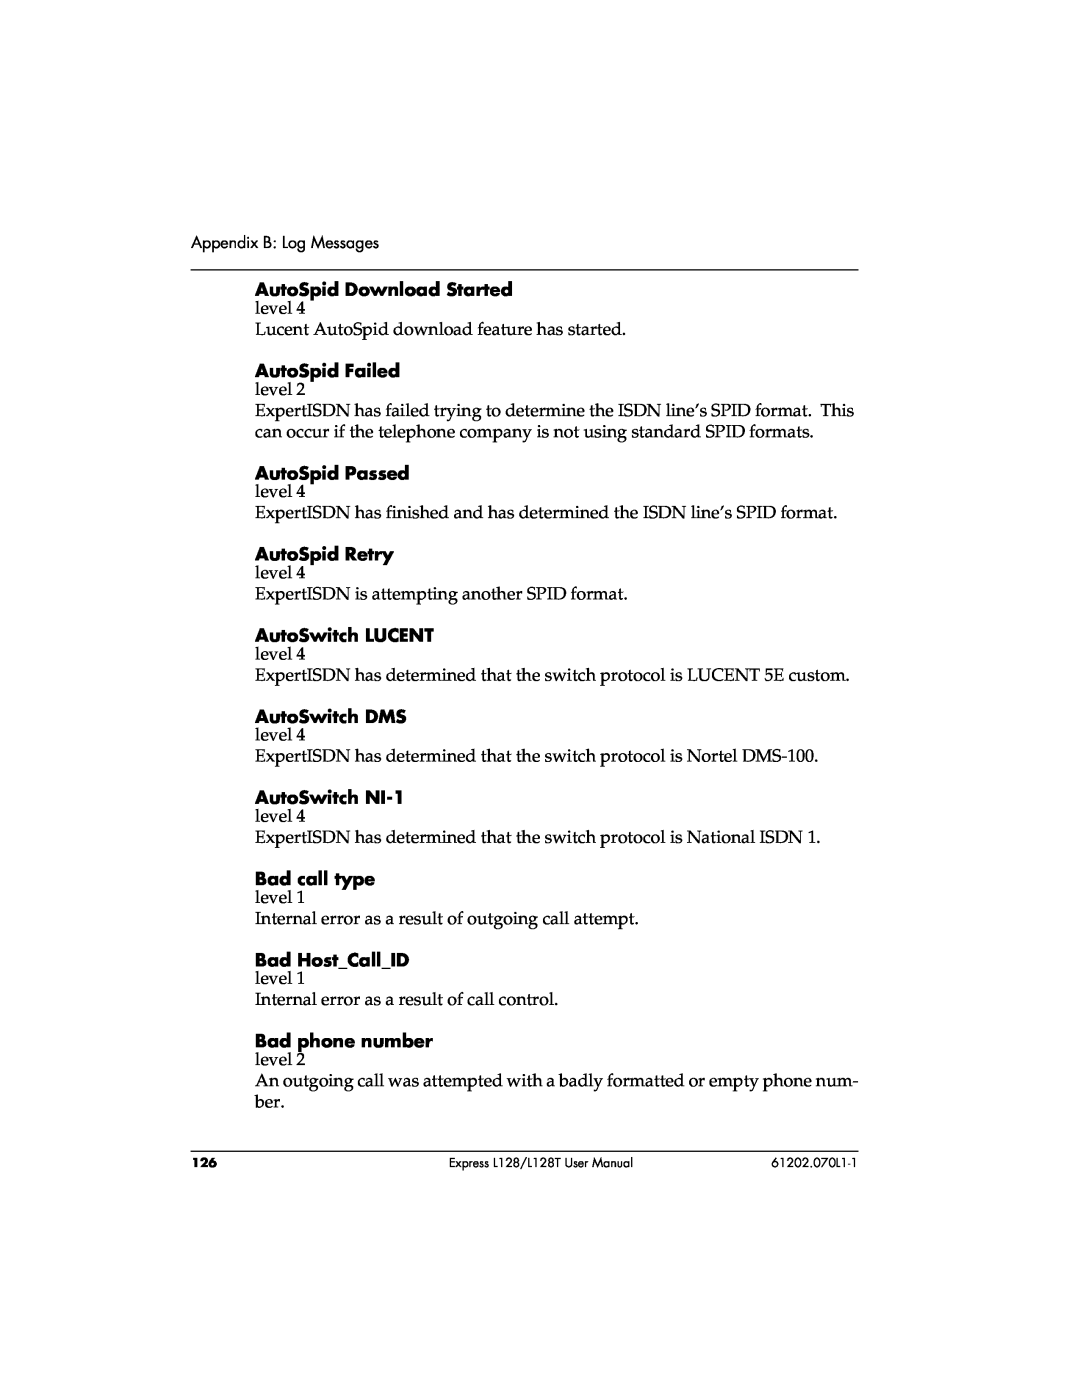 ADTRAN L128T user manual AutoSpid Download Started level 